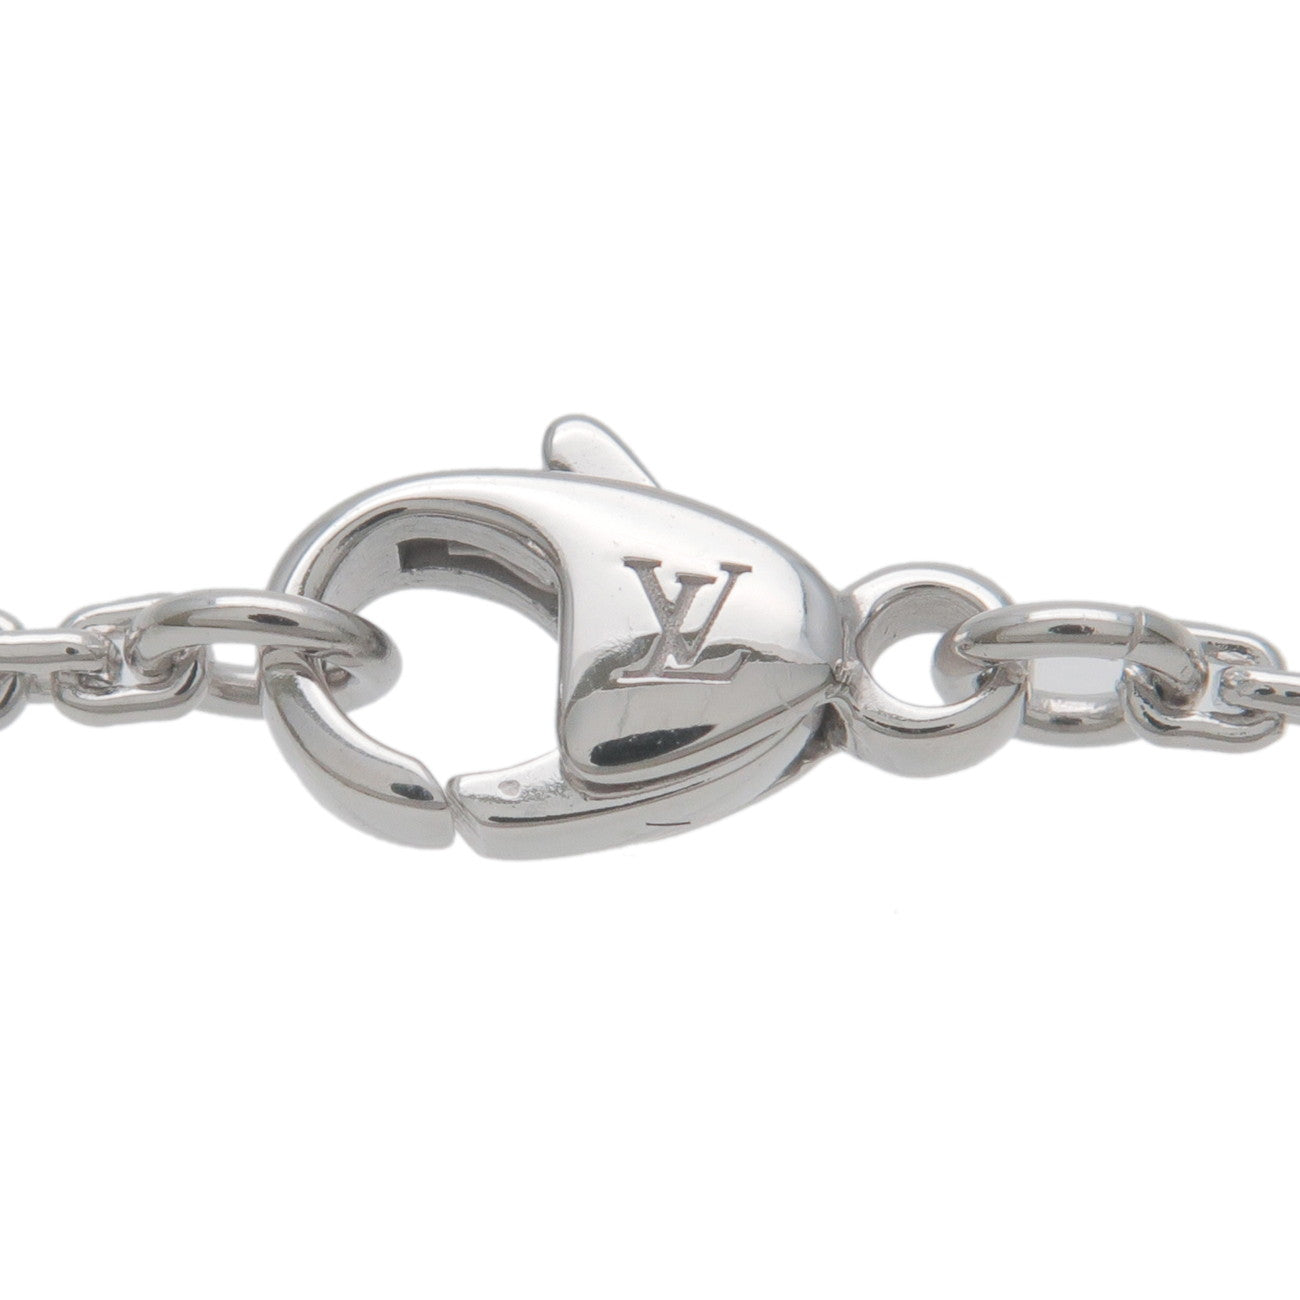 Louis-Vuitton-Pandantiff-Diamond-Necklace-K18-White-Gold-Q93670